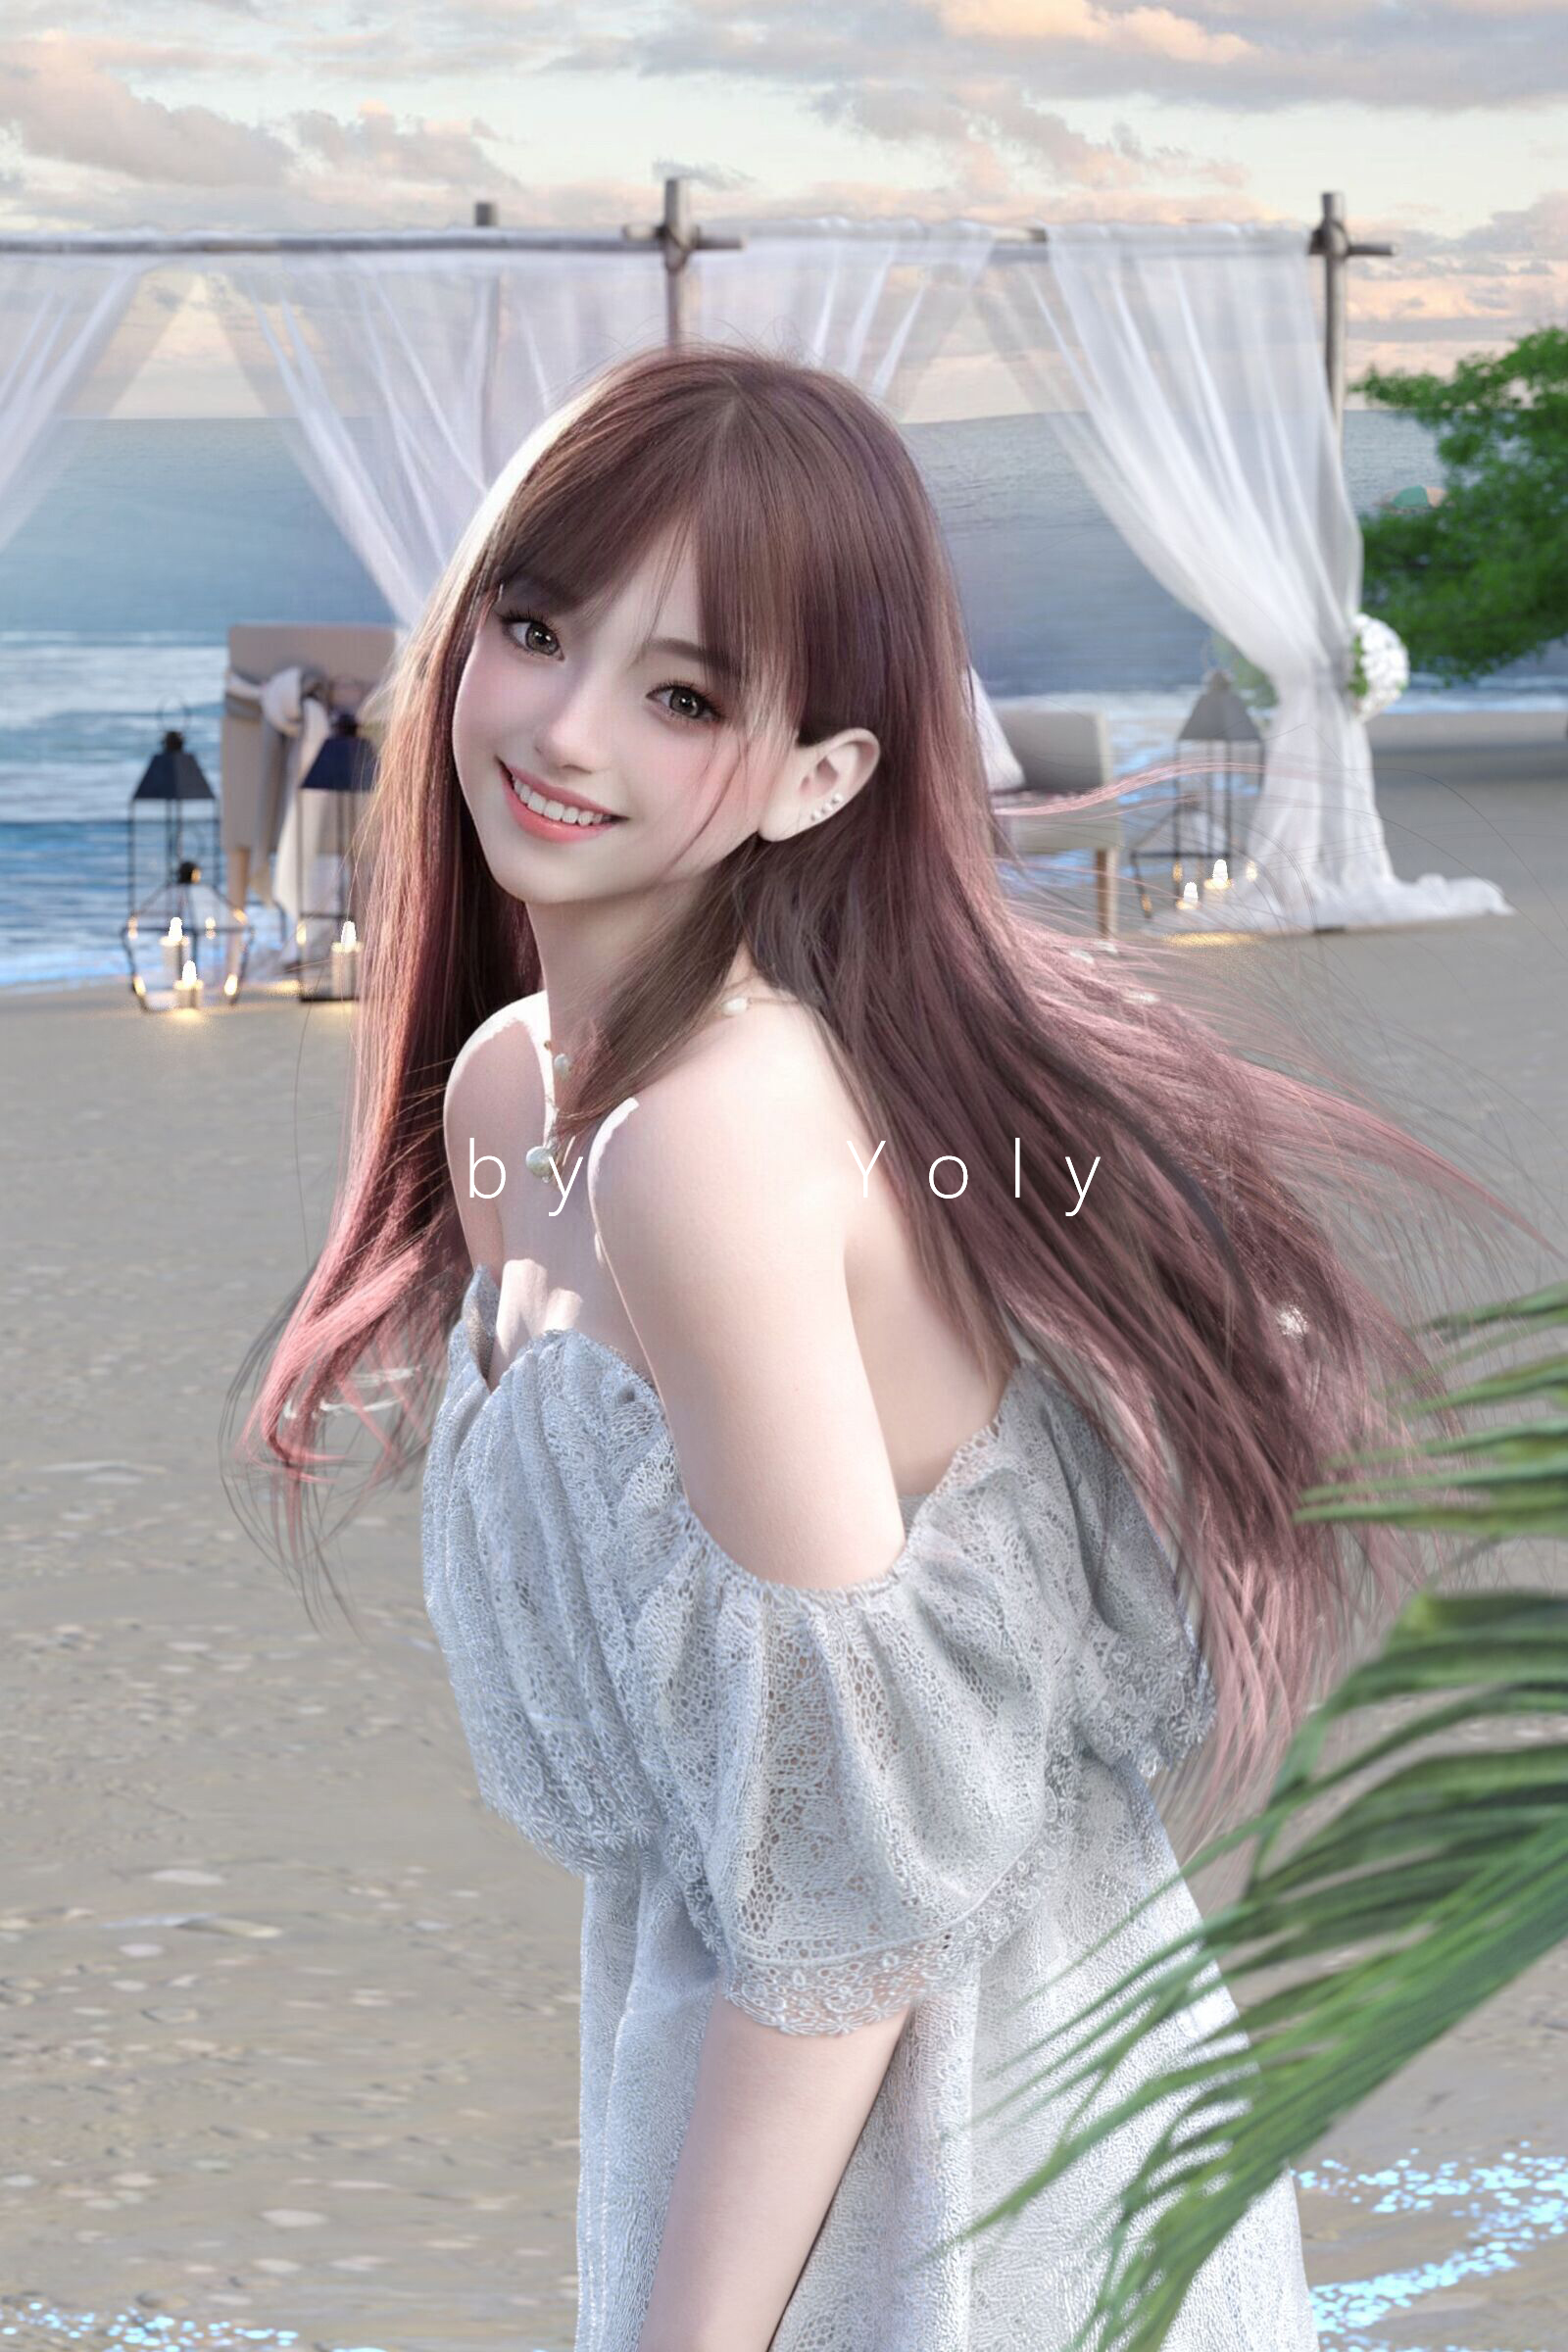 General 1600x2400 Yoly Asian women women indoors Daz 3D CGI digital art artwork long hair beach portrait display